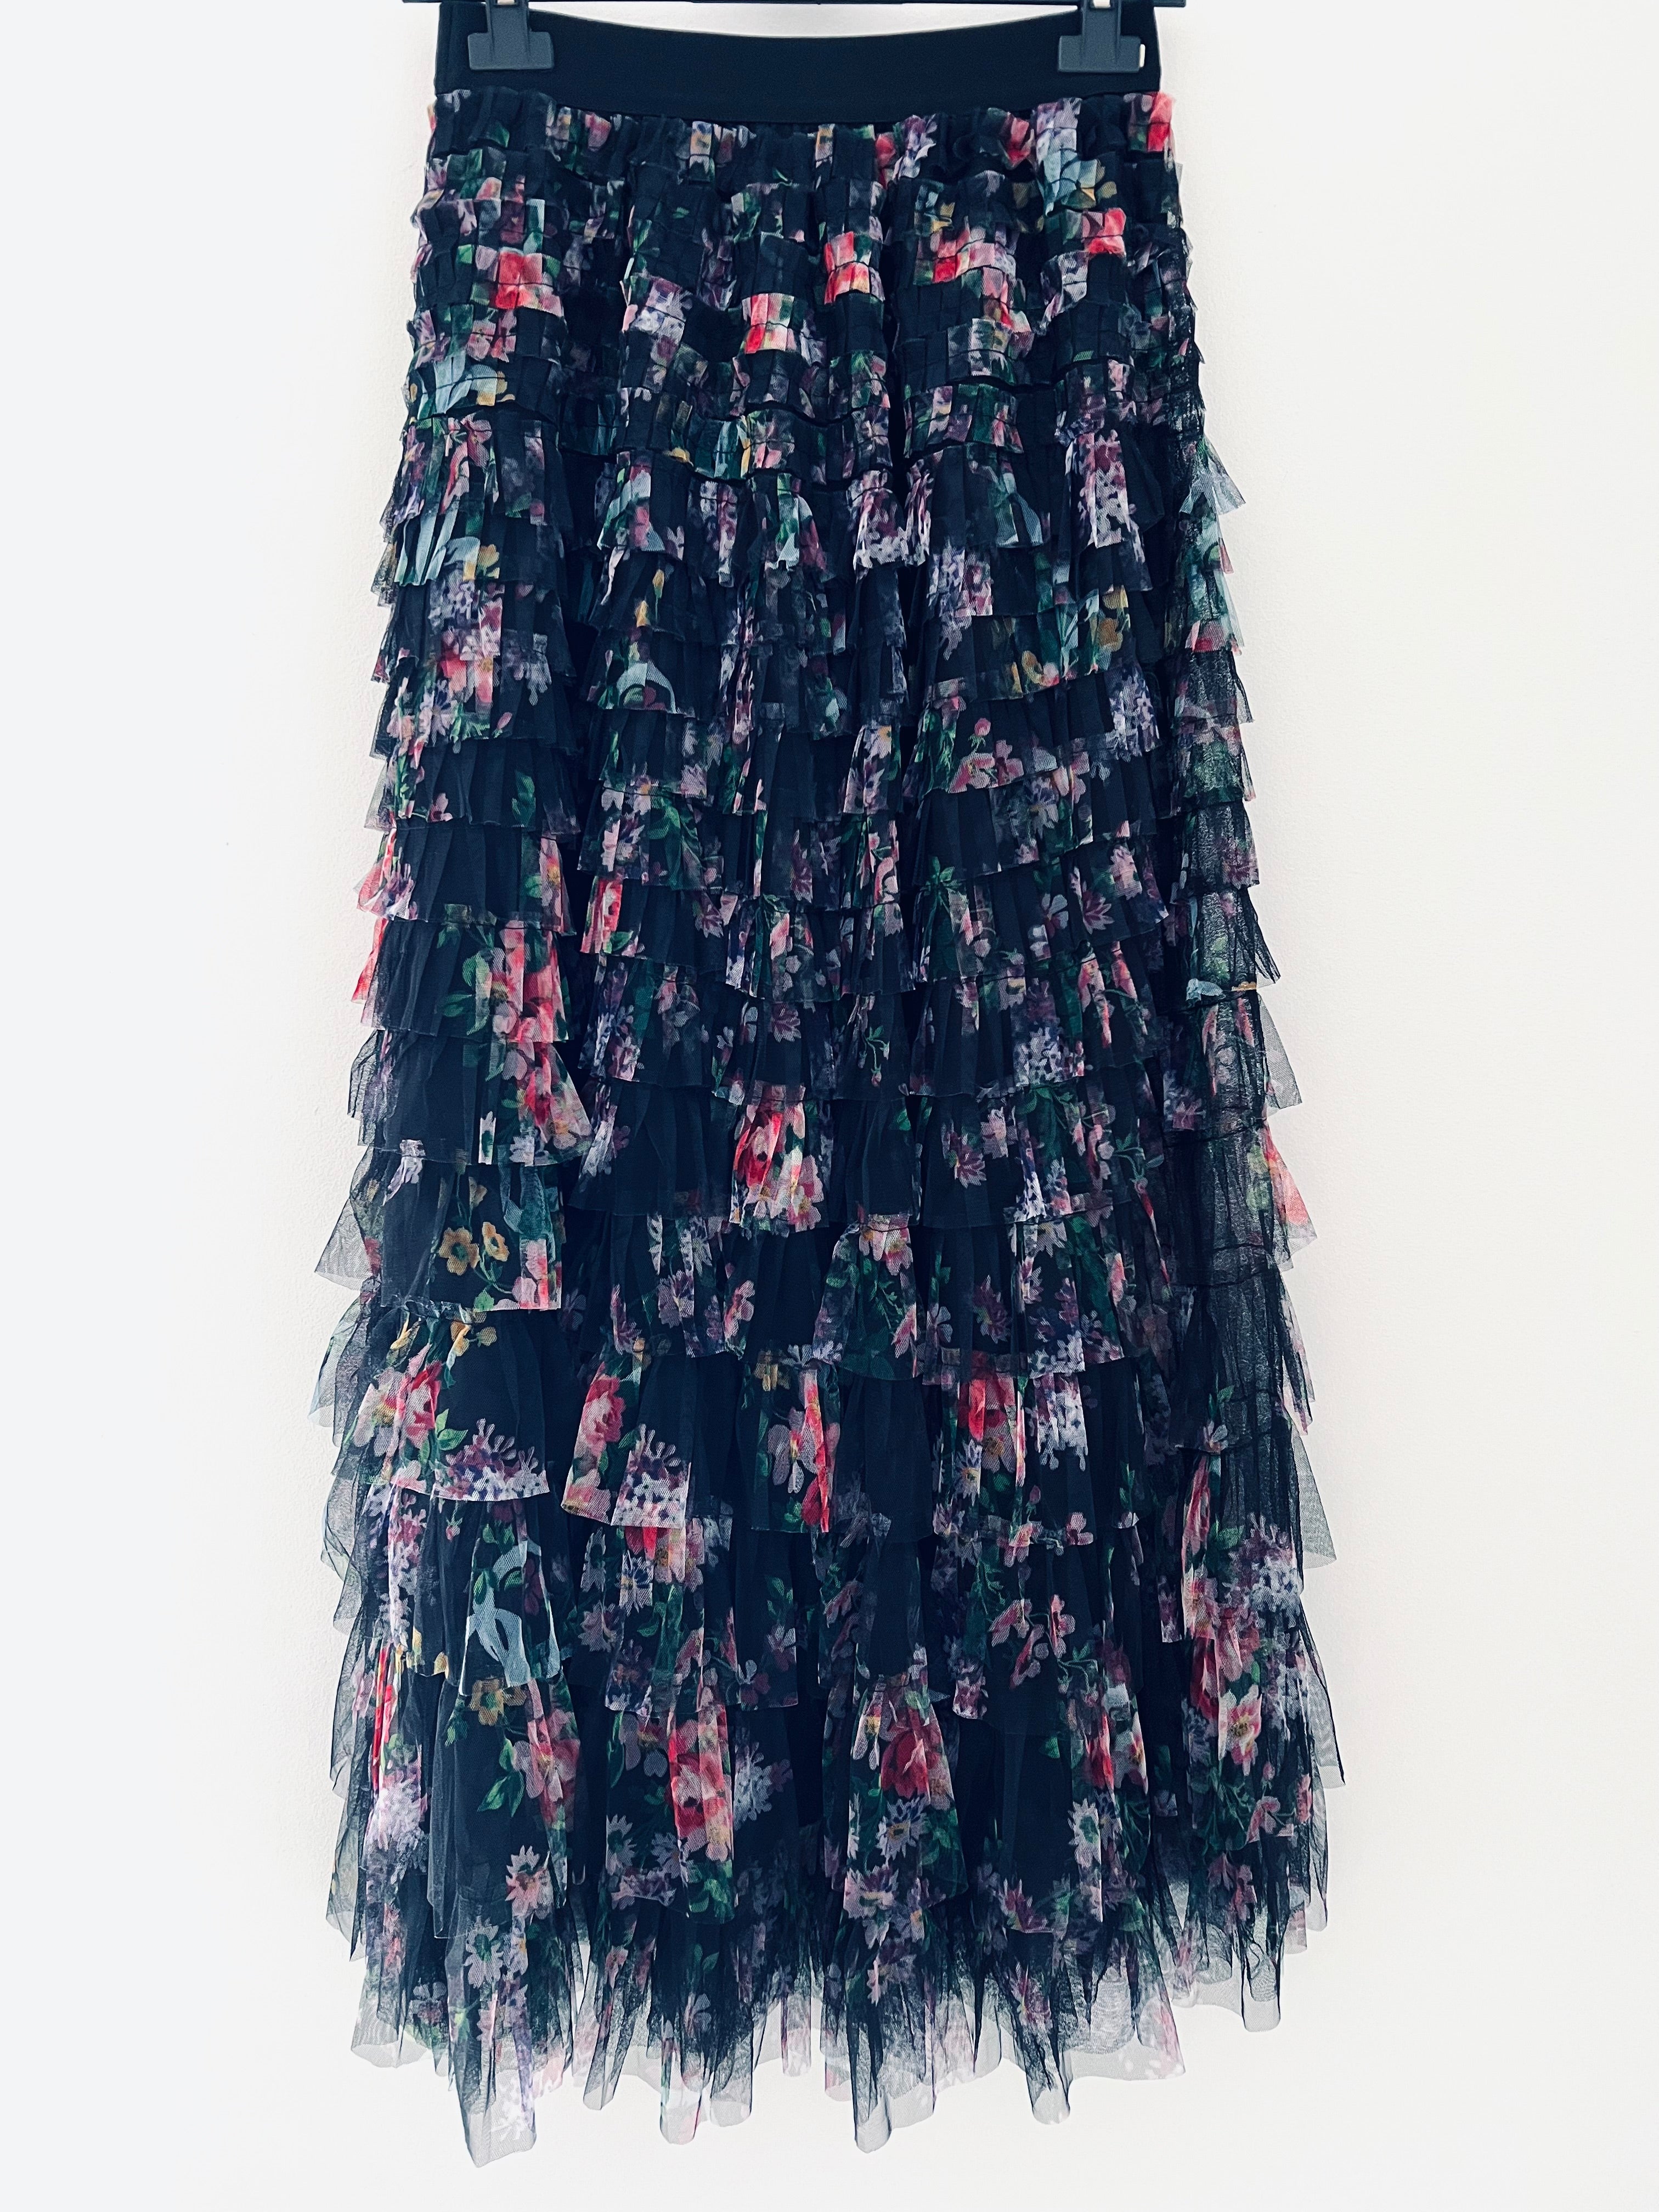 Tulle Midi Skirt in Black Floral